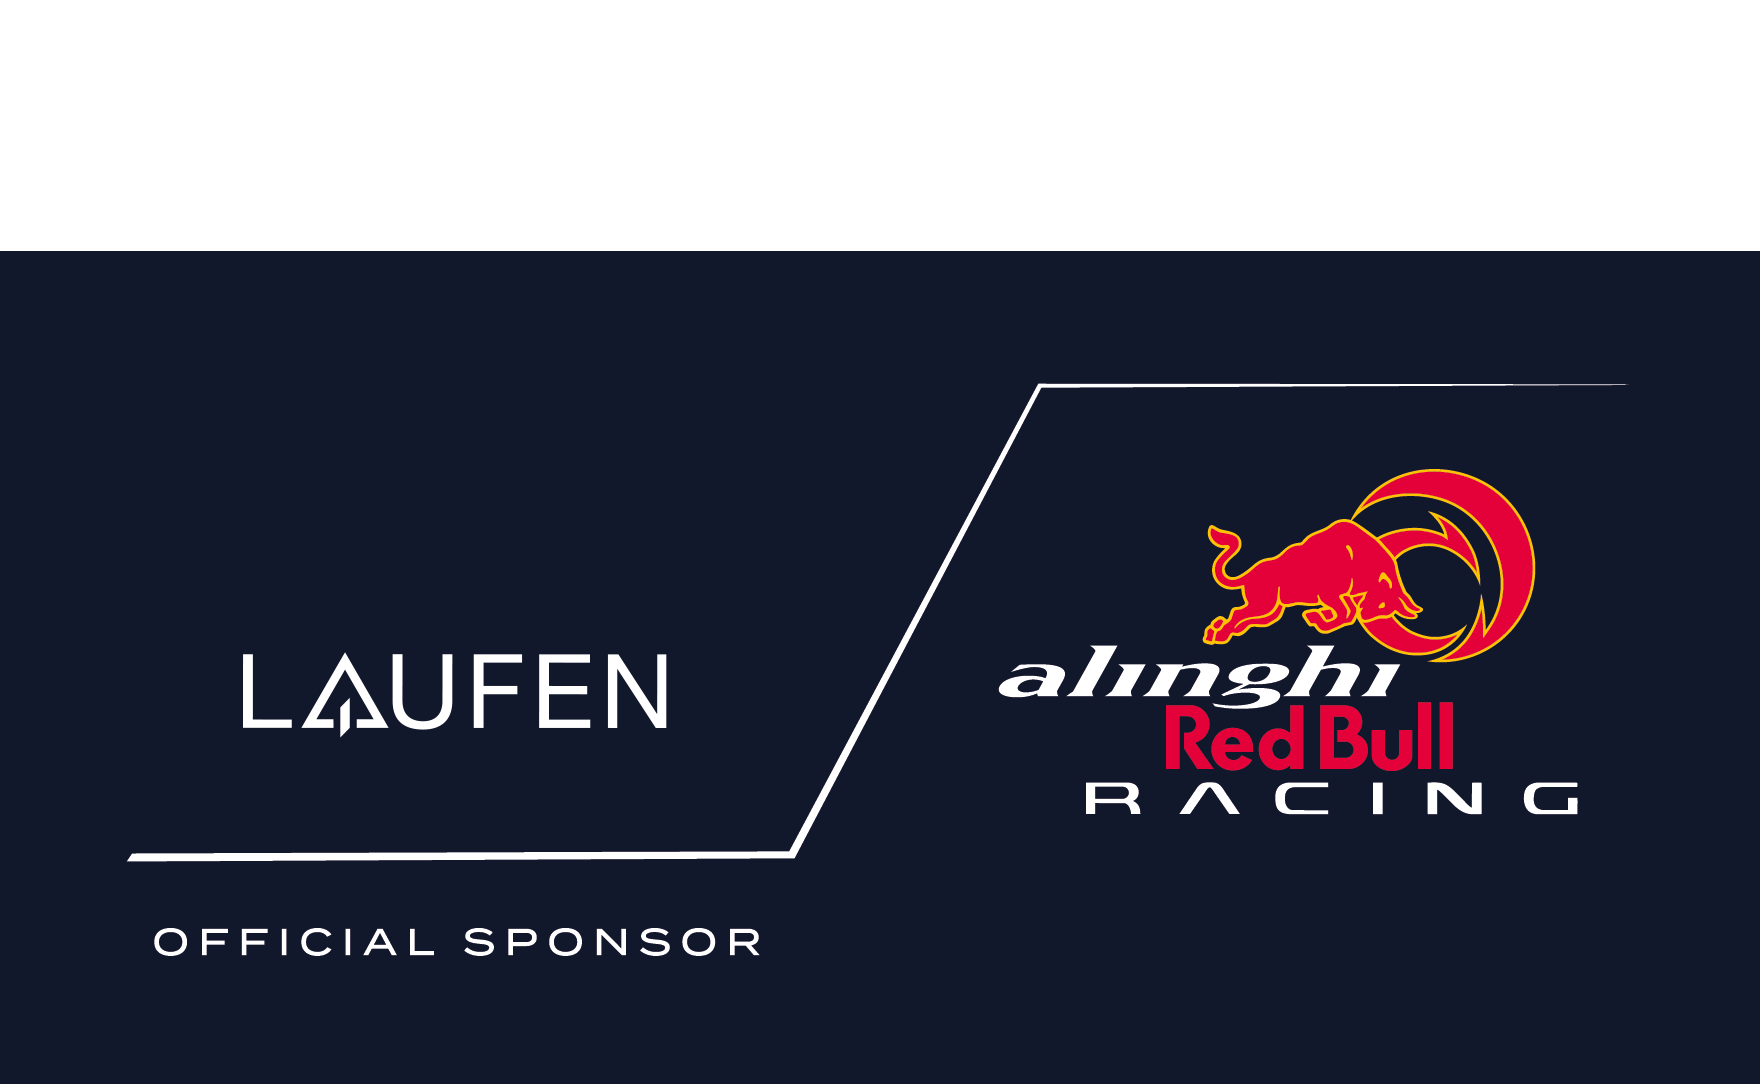 Laufen, official sponsor, Alinghi Red Bull racing, bathrooms, Bathroom, design, racing